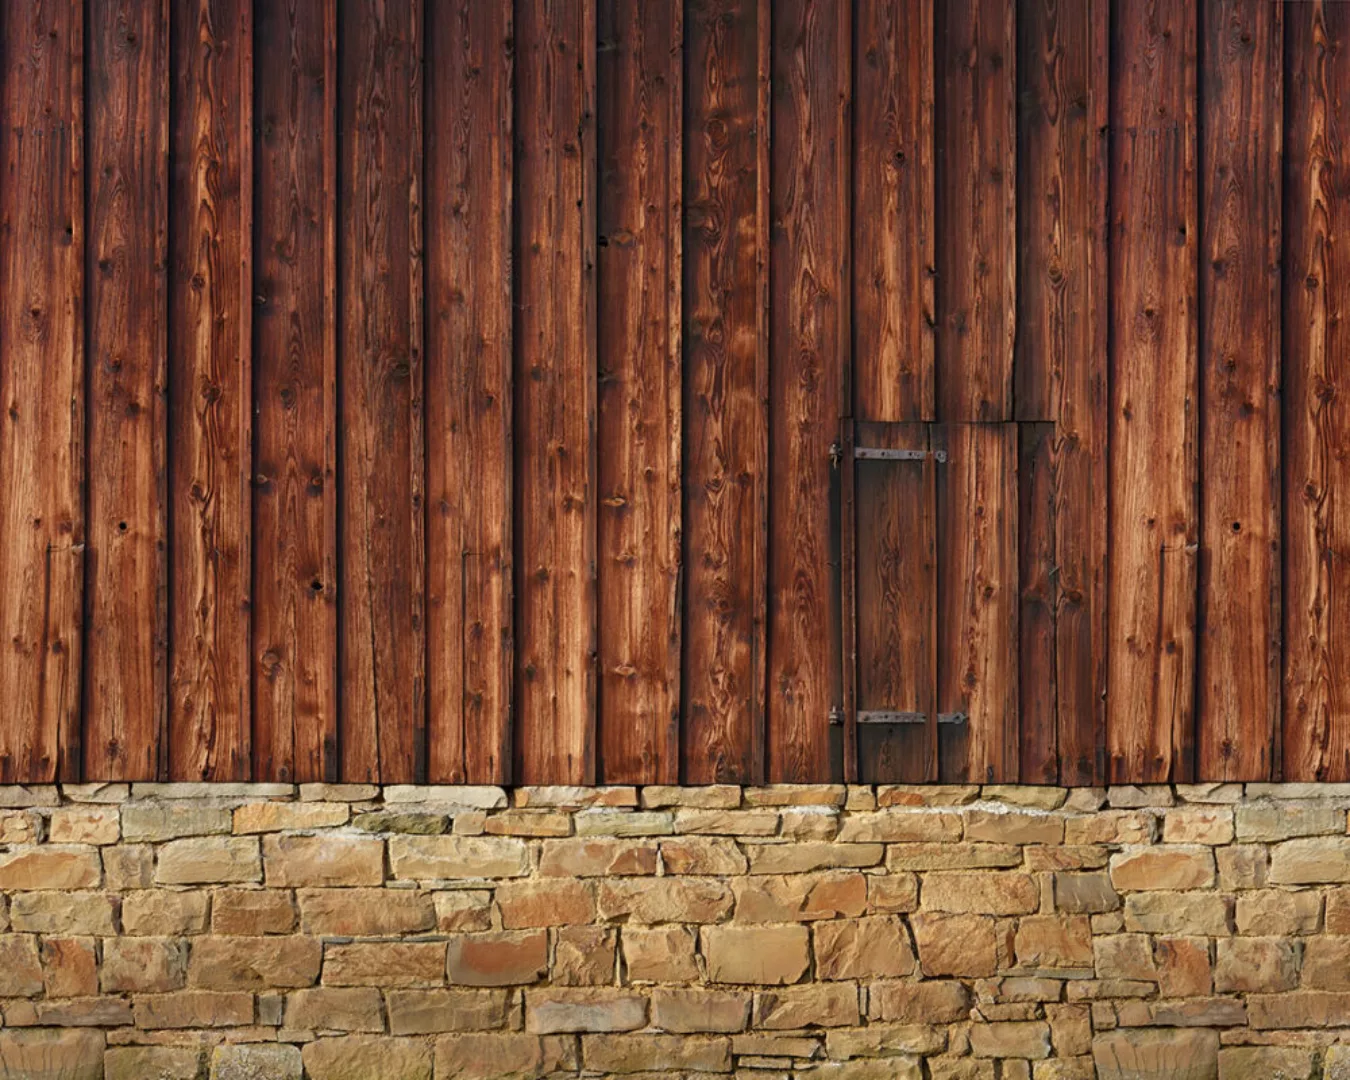 Fototapete "Holzfassade" 4,00x2,50 m / Glattvlies Perlmutt günstig online kaufen